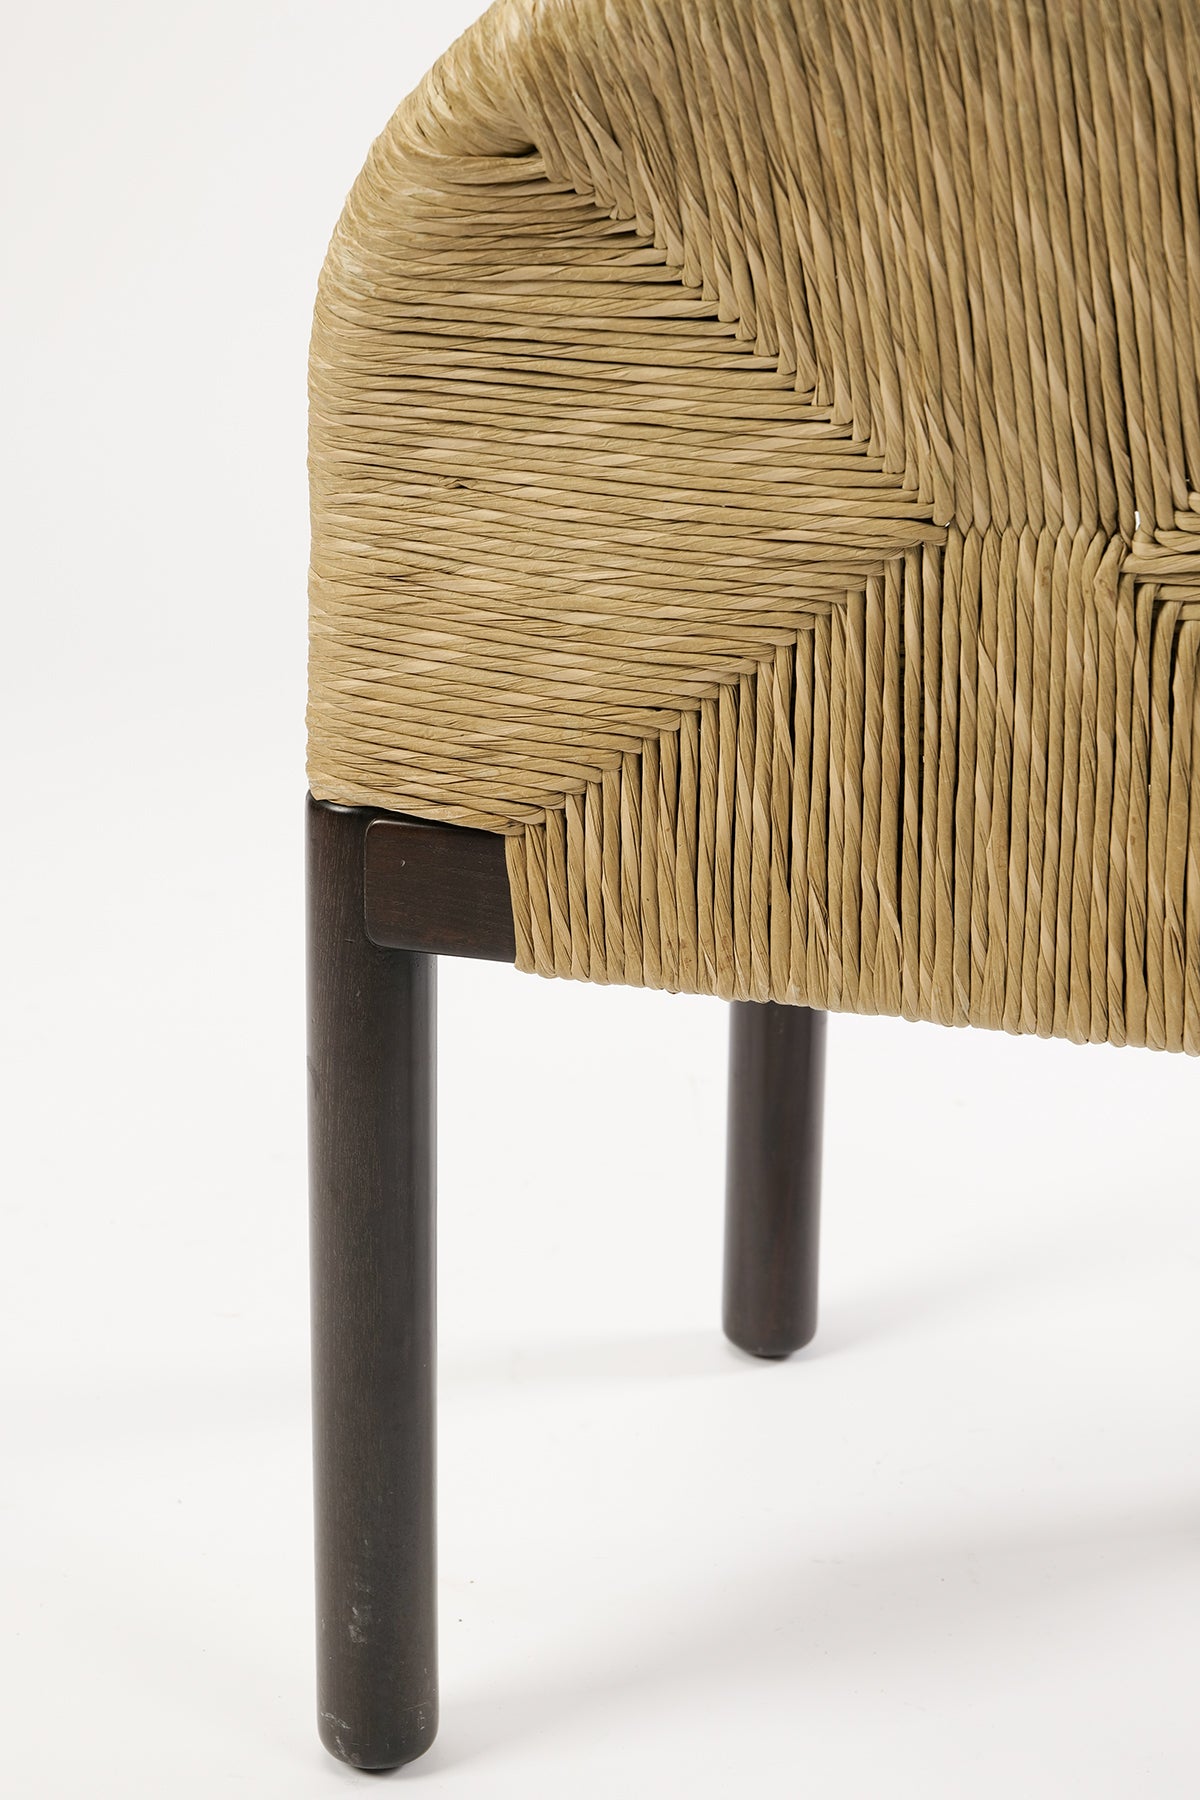 De Pas, D'Urbino & Lomazzi Dining Chairs (6 Available)